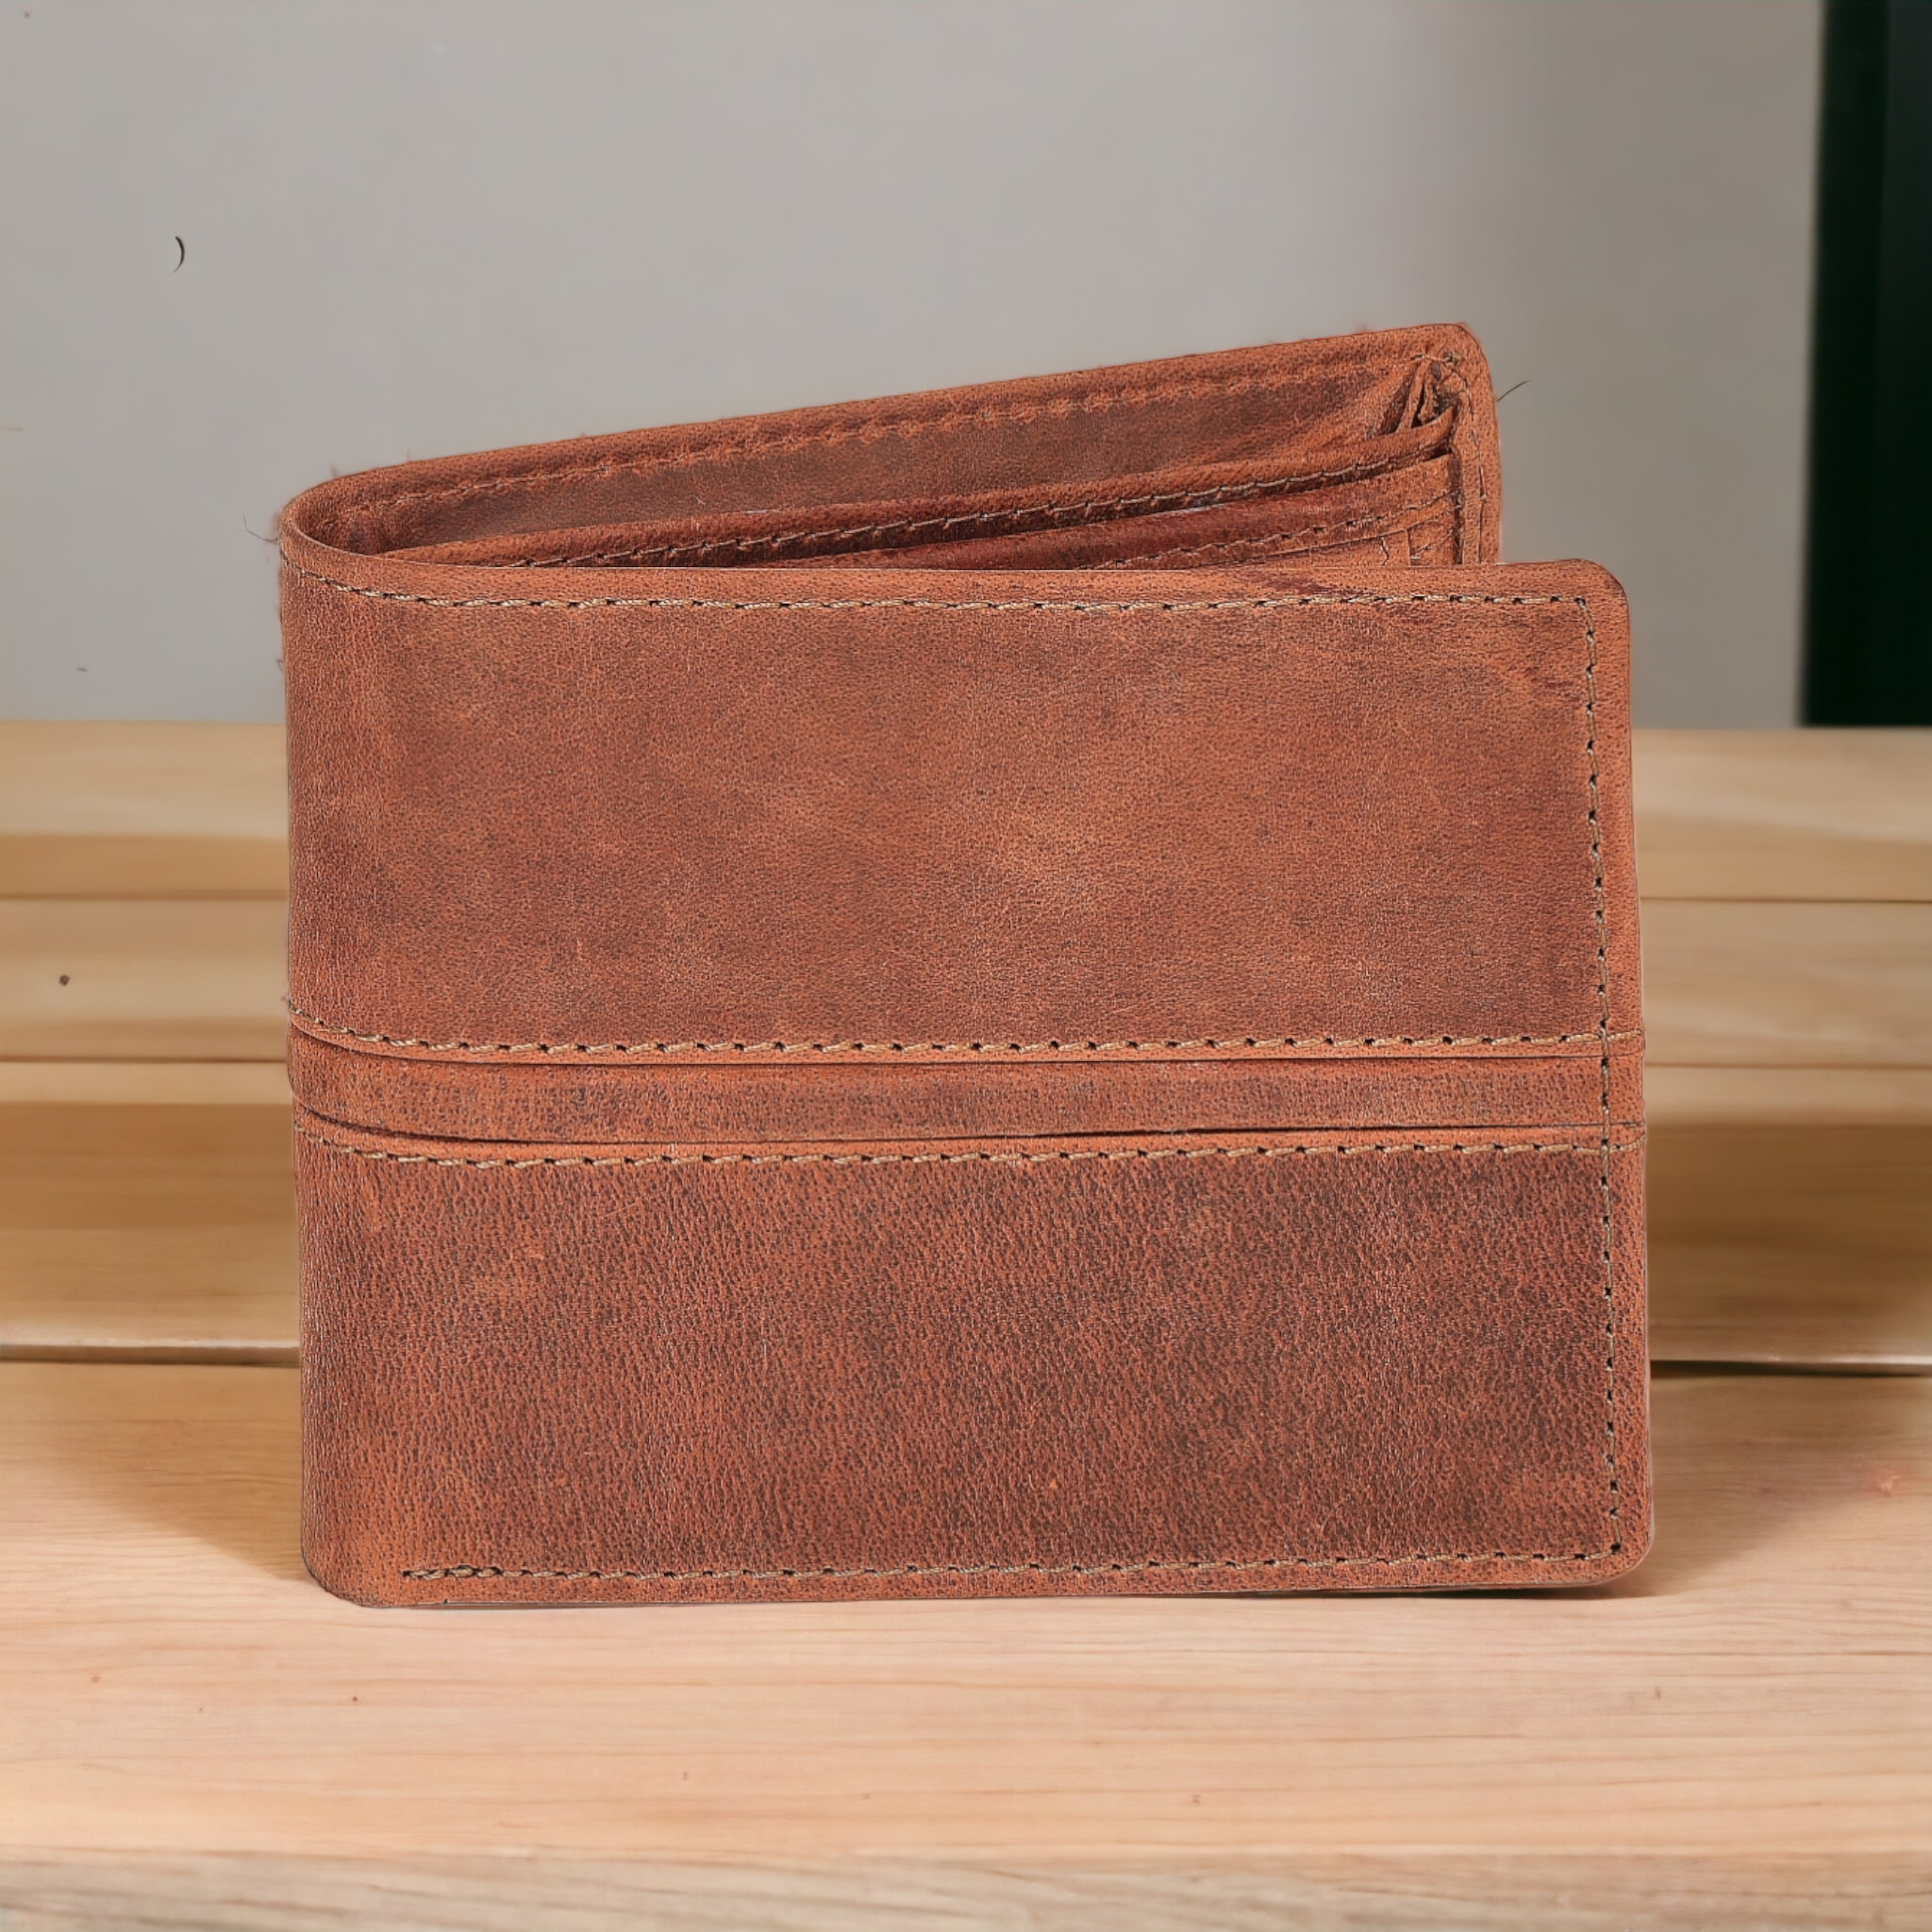 Buy Spiffy Premium Branded Genuine Leather Wallet for Men with Card Holder  | Wallet Men | RFID Men Wallet | Men Purse at Amazon.in